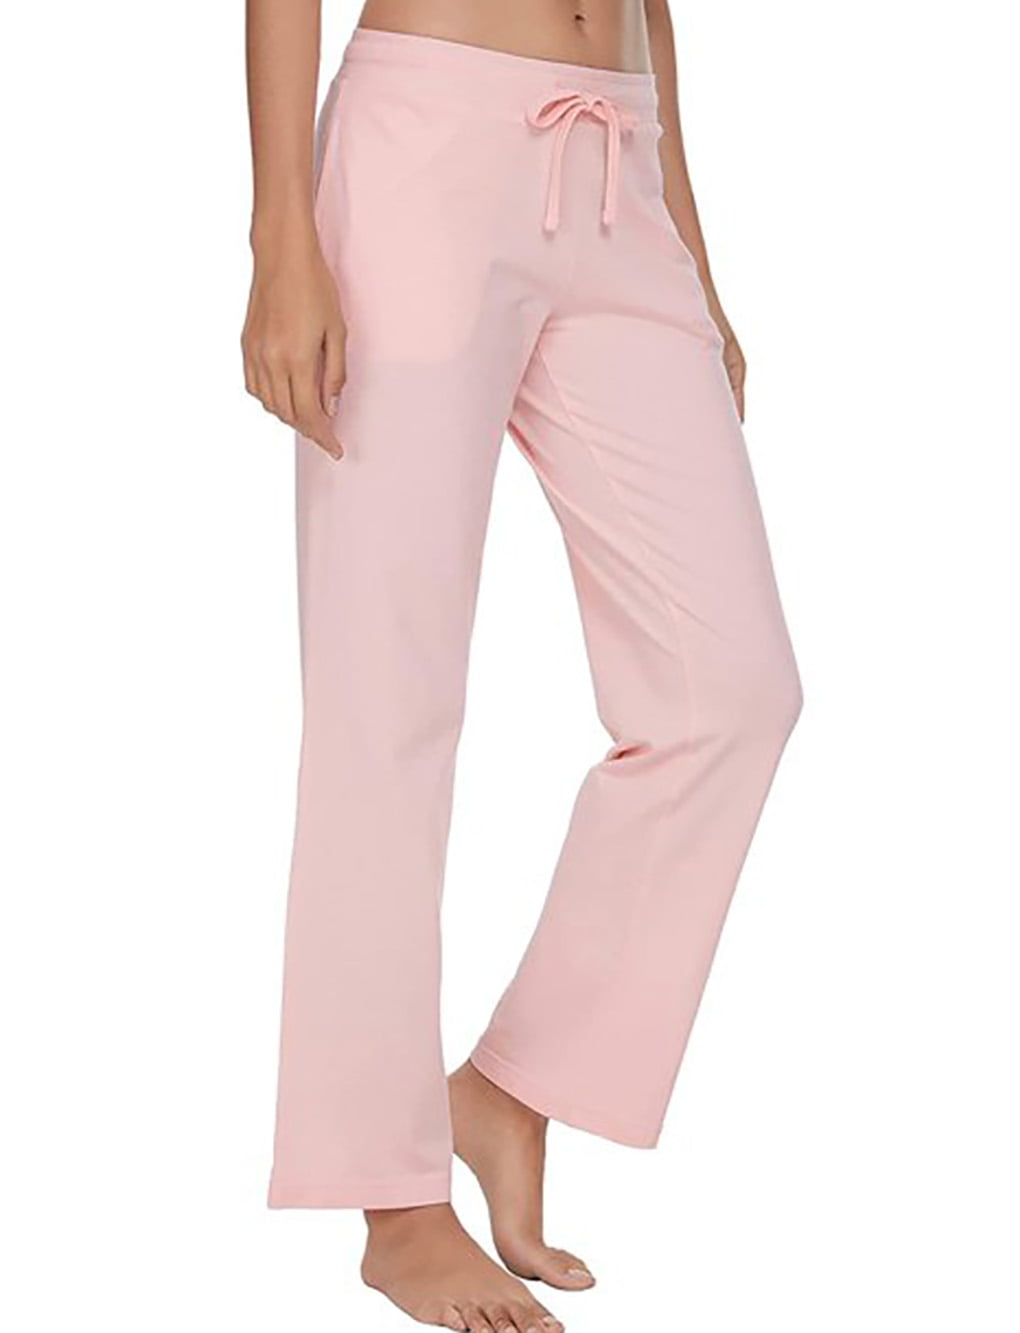 Pinky Summer Pajama Pants - Cotton Lycra @ Best Price Online